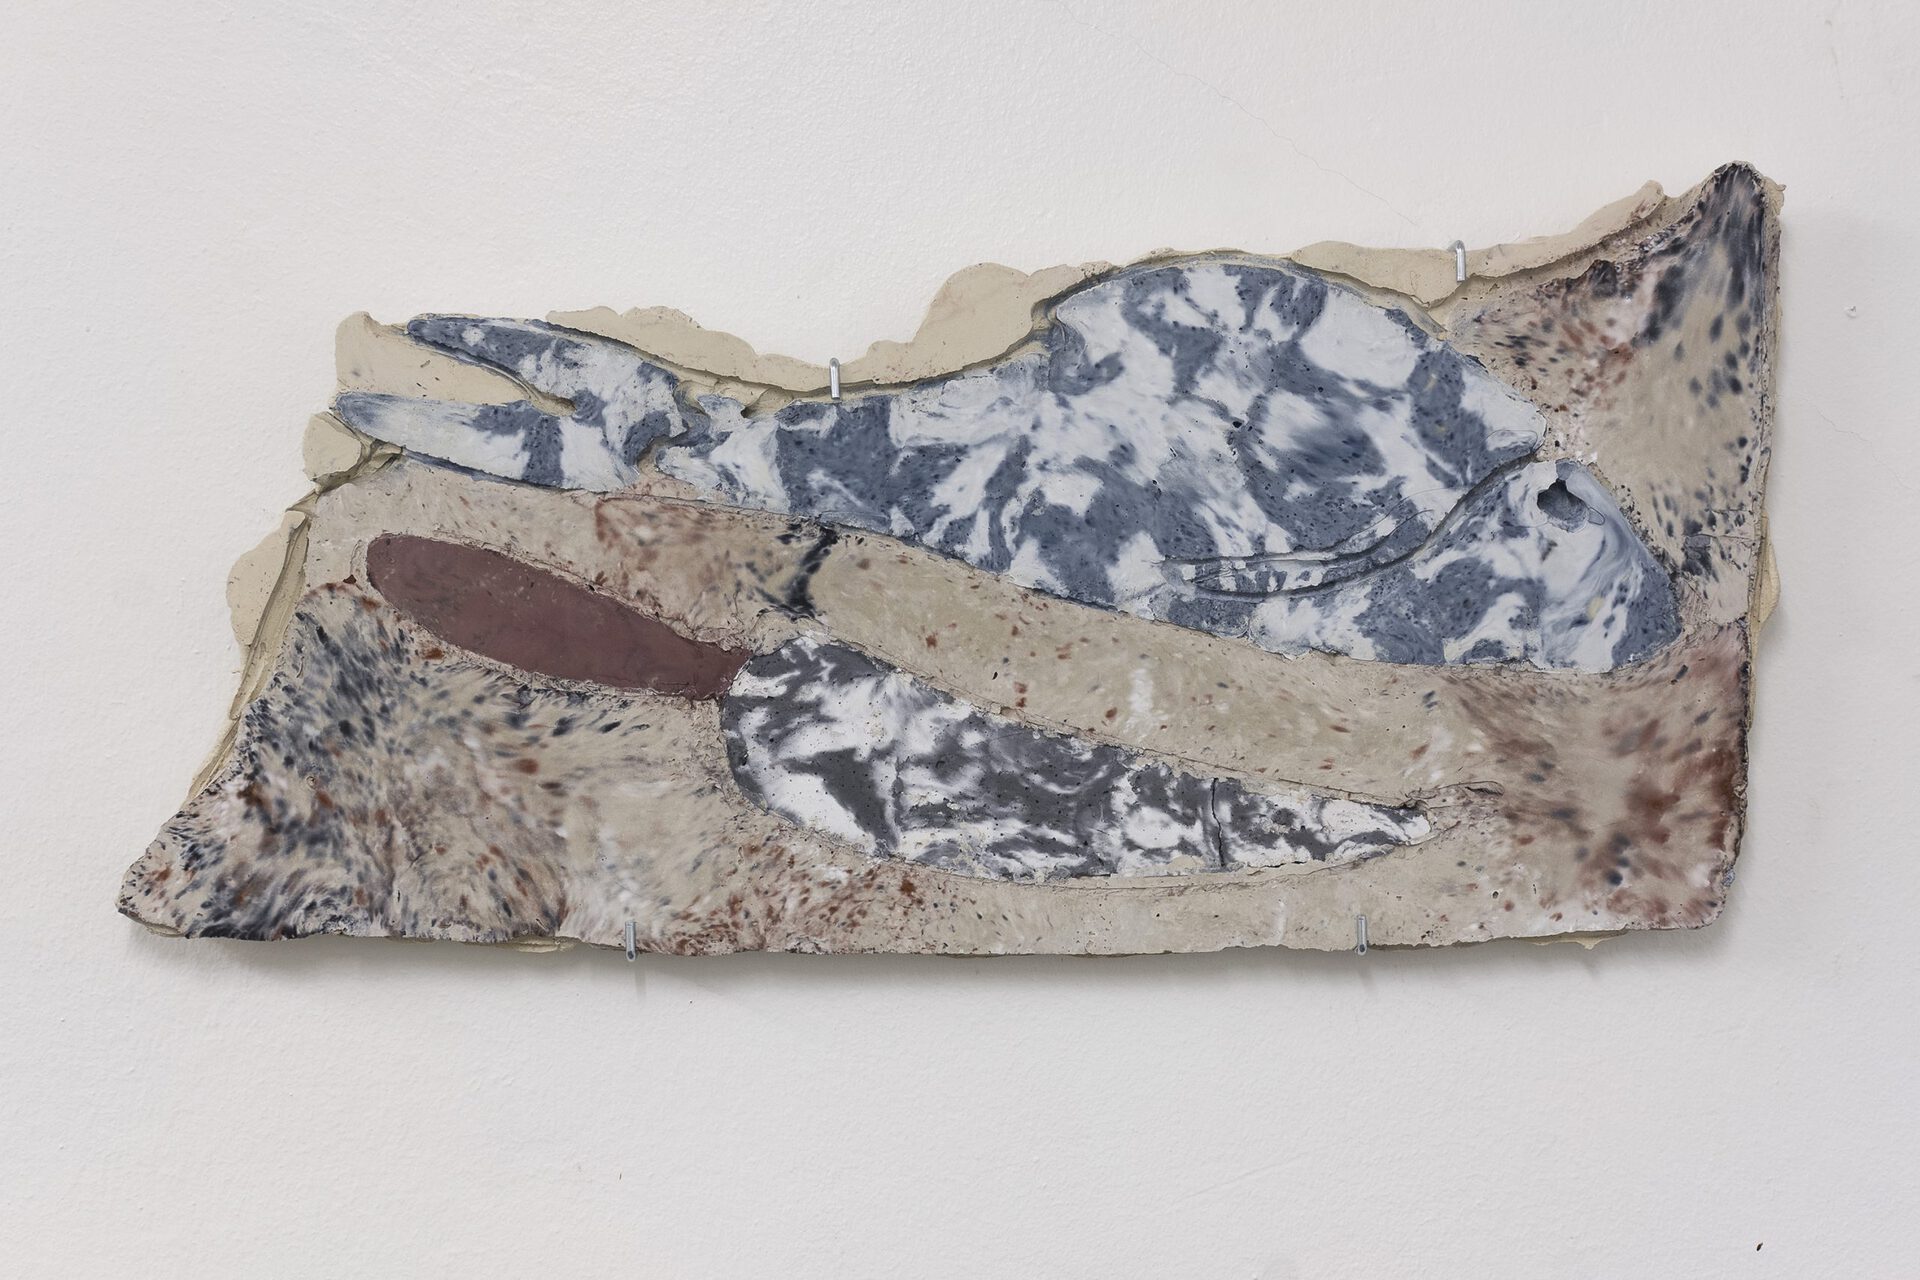 Zuzanna Czebatul, The Cut (Fish), 2020, Concrete, pigments, 31 x 66 x 3,5 cm